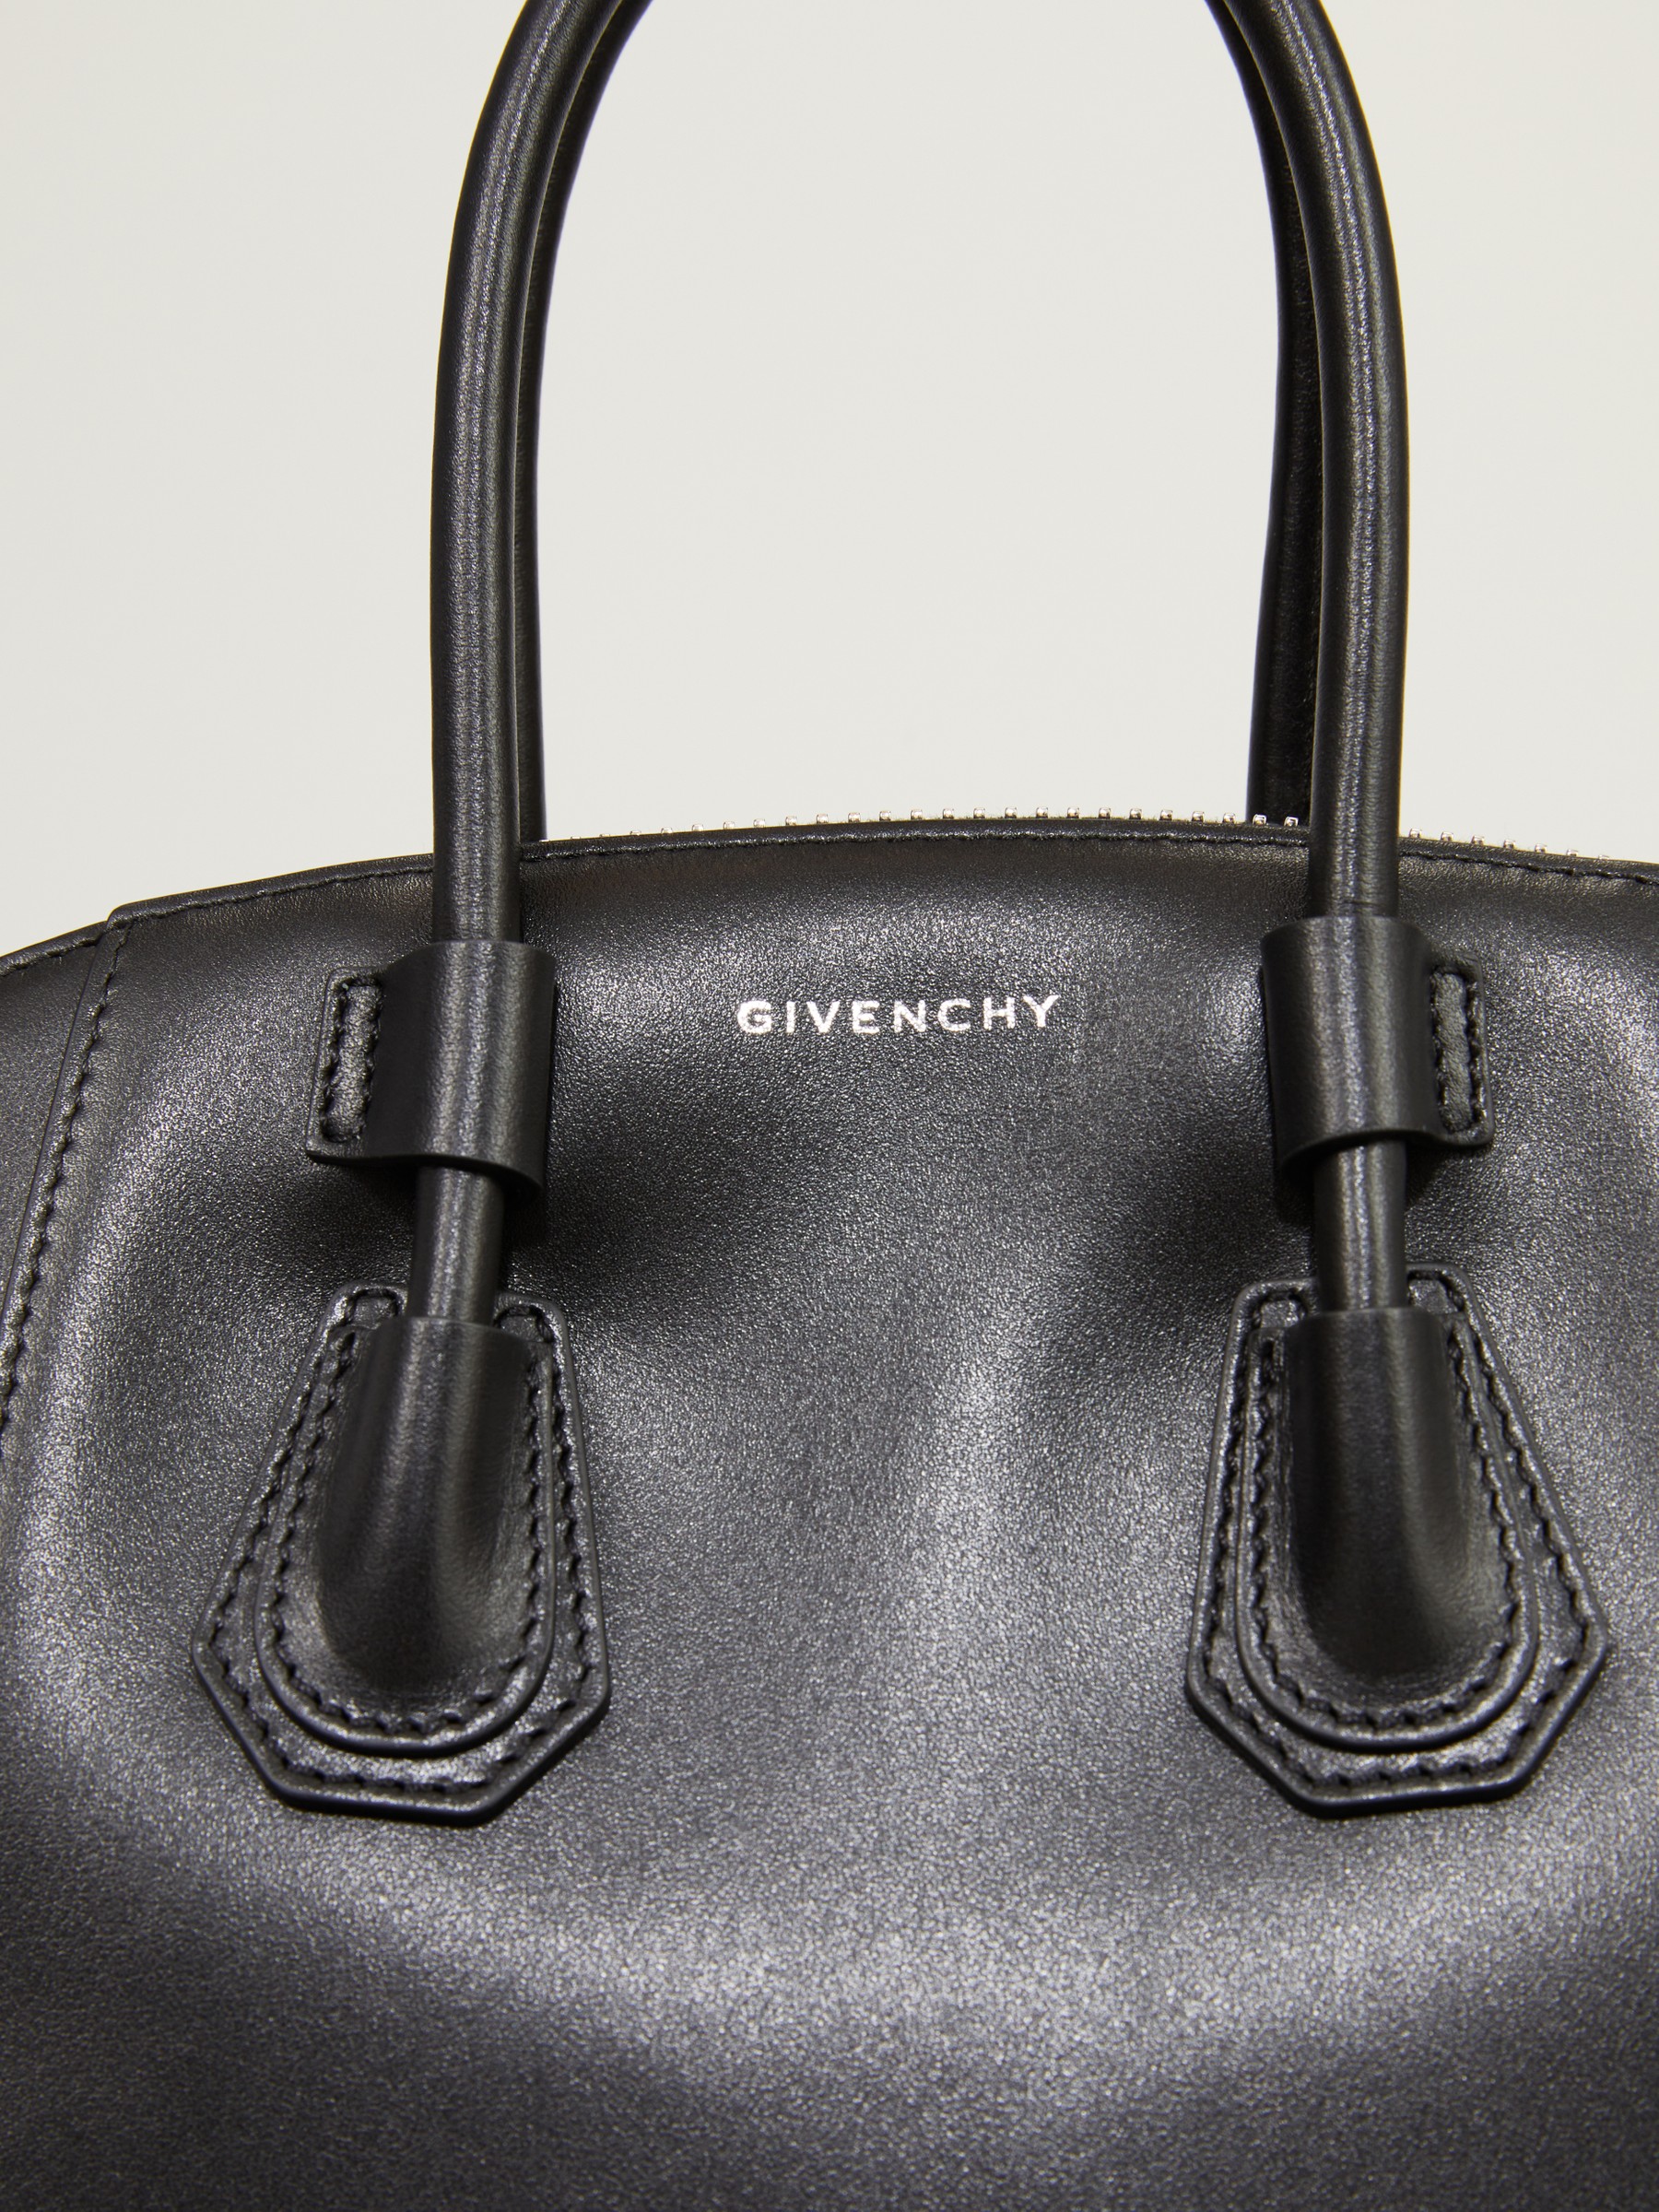 GIVENCHY Handbag 'Mini Antigona' Black | New Beginnings - New Bags